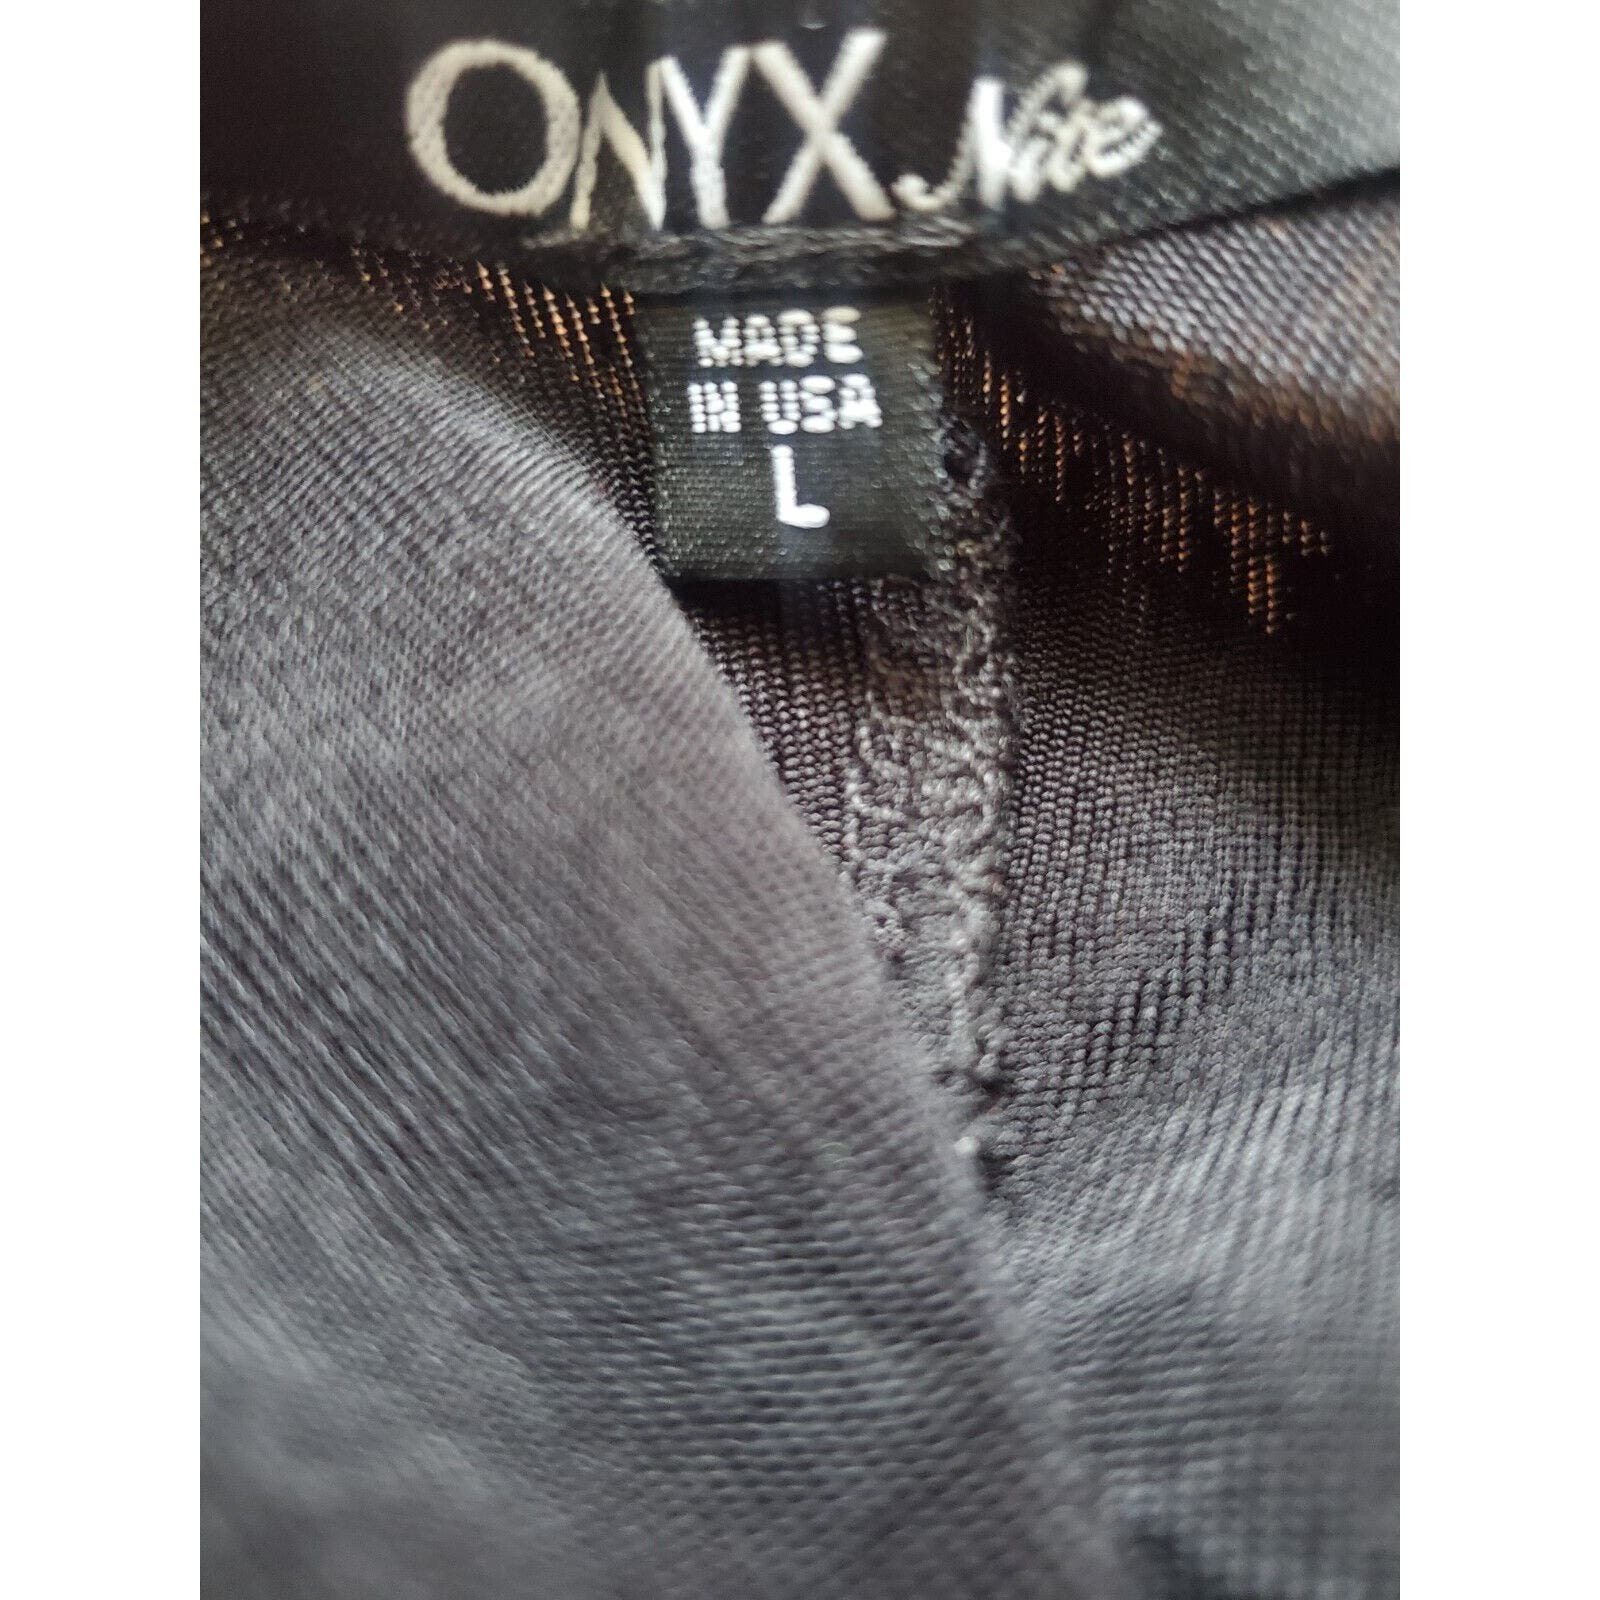 Elegant ONYX NITE Women´s Large Top & Jacket BLACK FLORAL FORMAL Stretch nrecoBG1L for sale